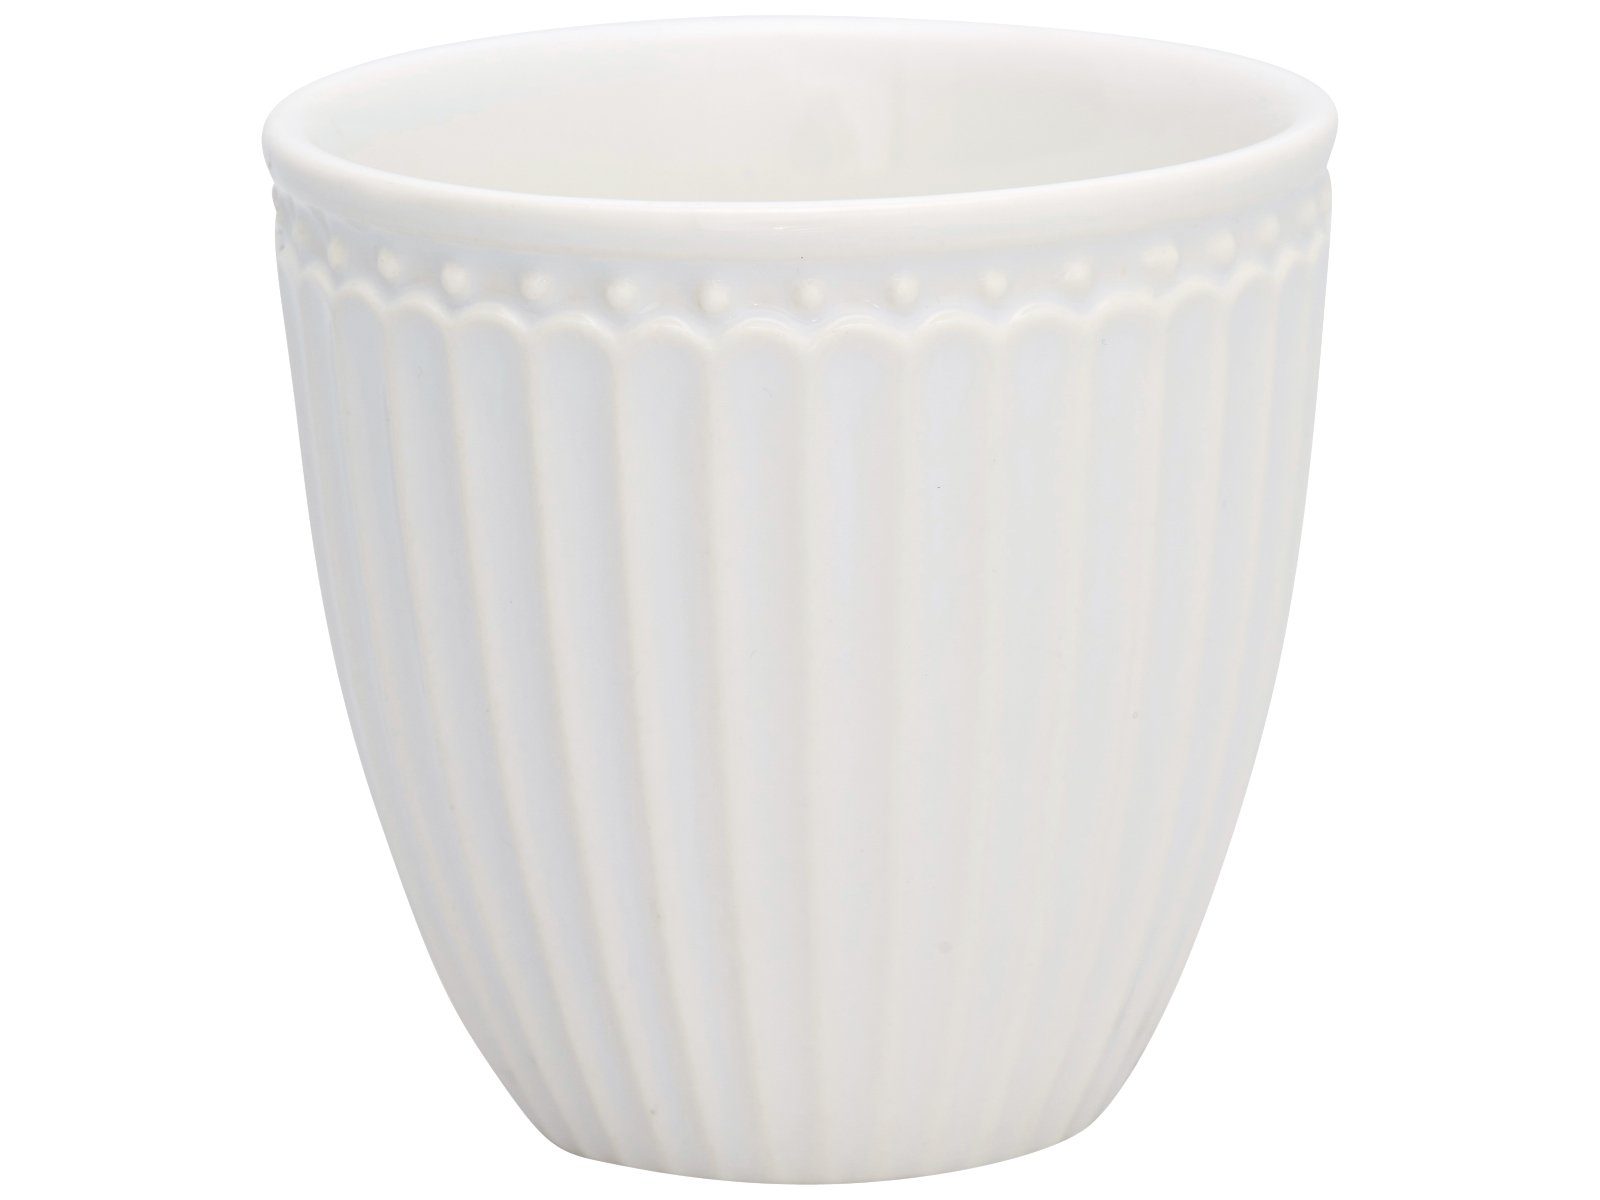 Greengate Espressotasse Alice Mini Latte Cup white Ø 7 cm, Porzellan